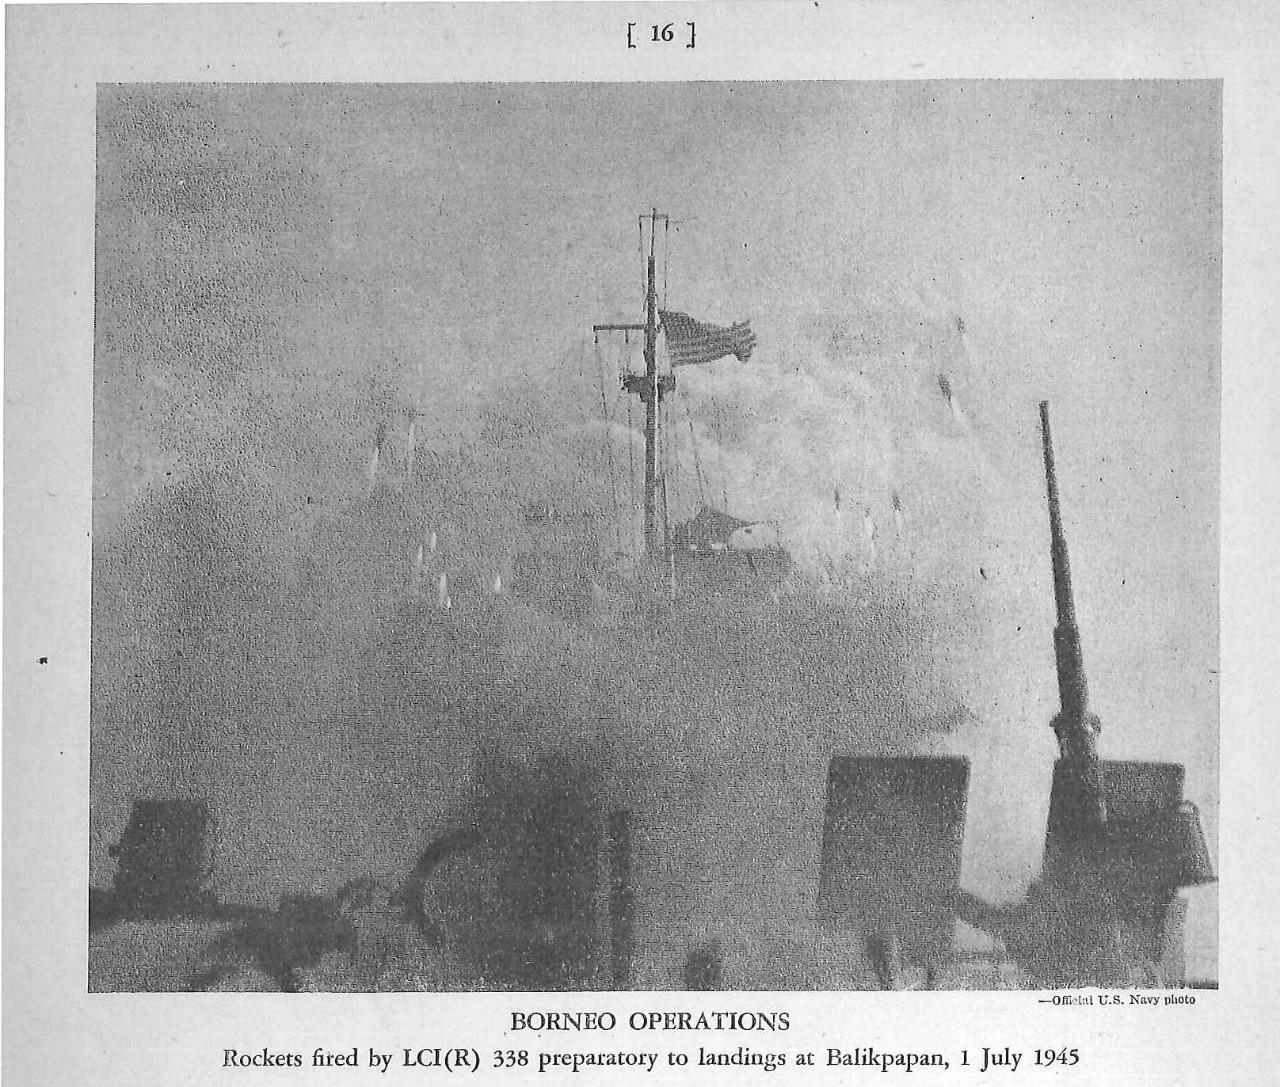 BORNEO OPERATIONS Rockets fired by LCI (R) 338 preparatory to landings at Balikpapan, 1 July 1945